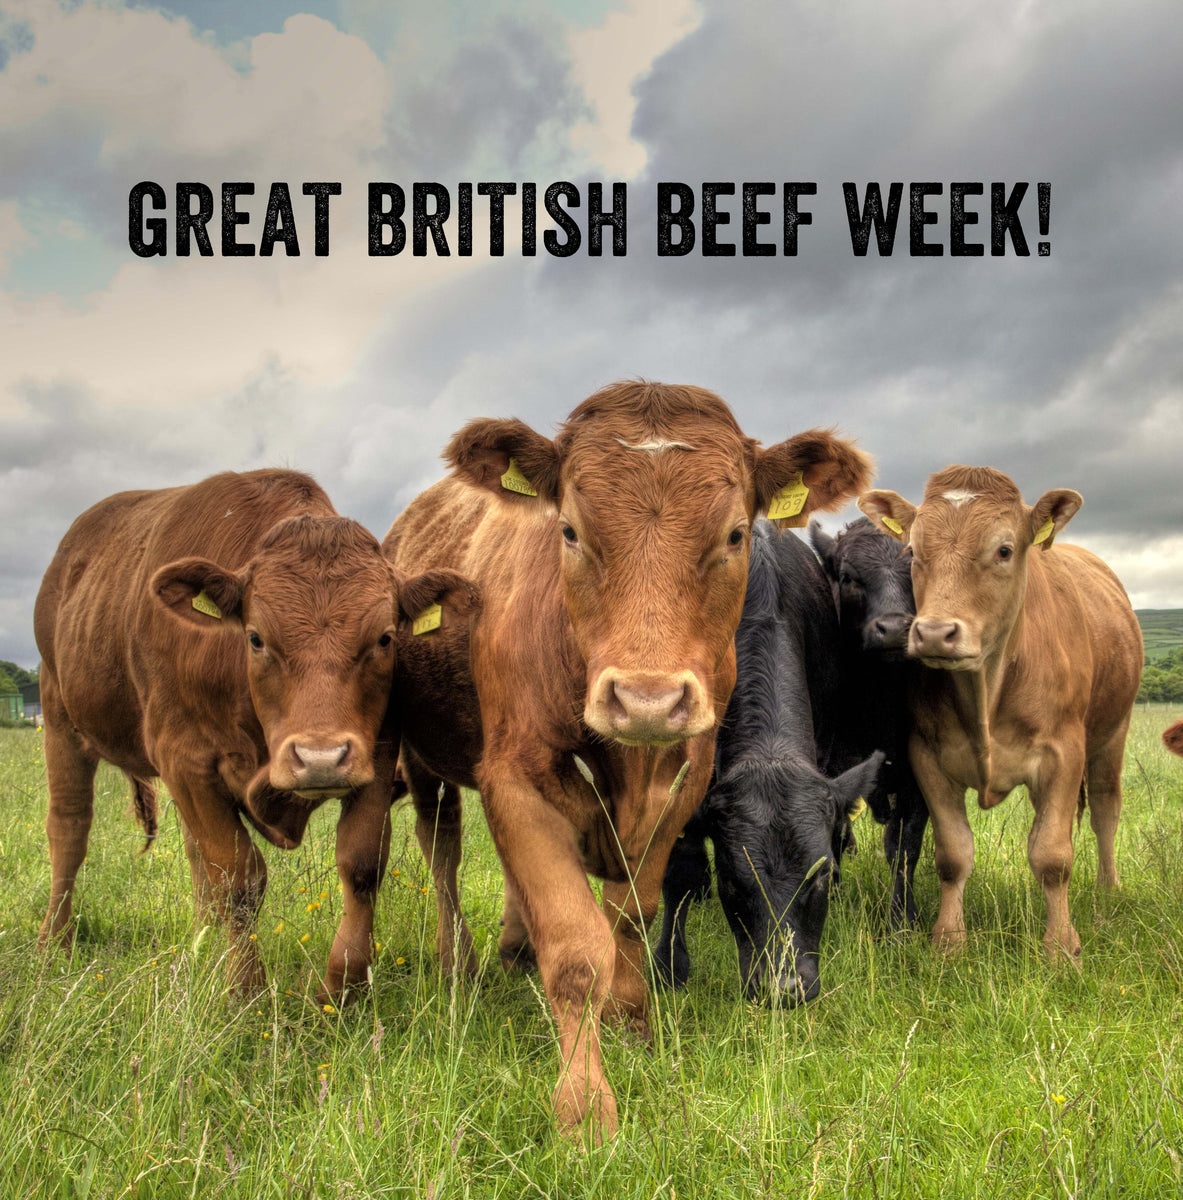 It's Great British Beef Week! meat! Premium Biltong